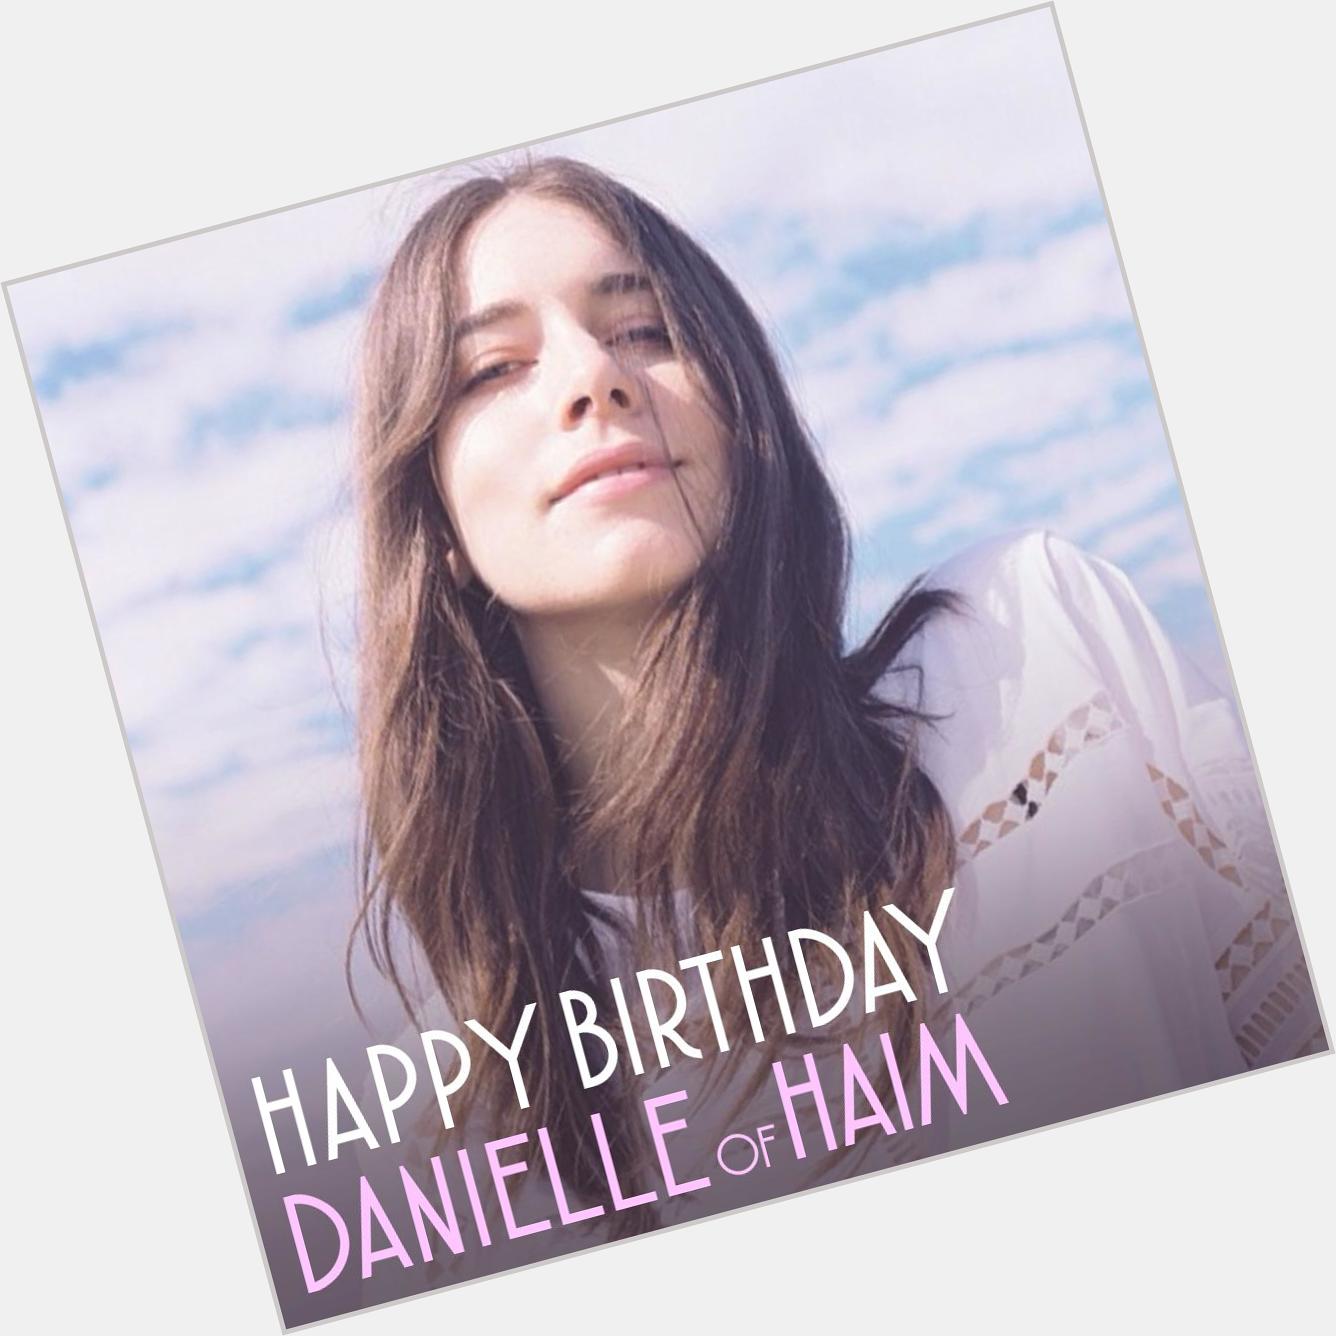 Happy birthday to Danielle Haim of  